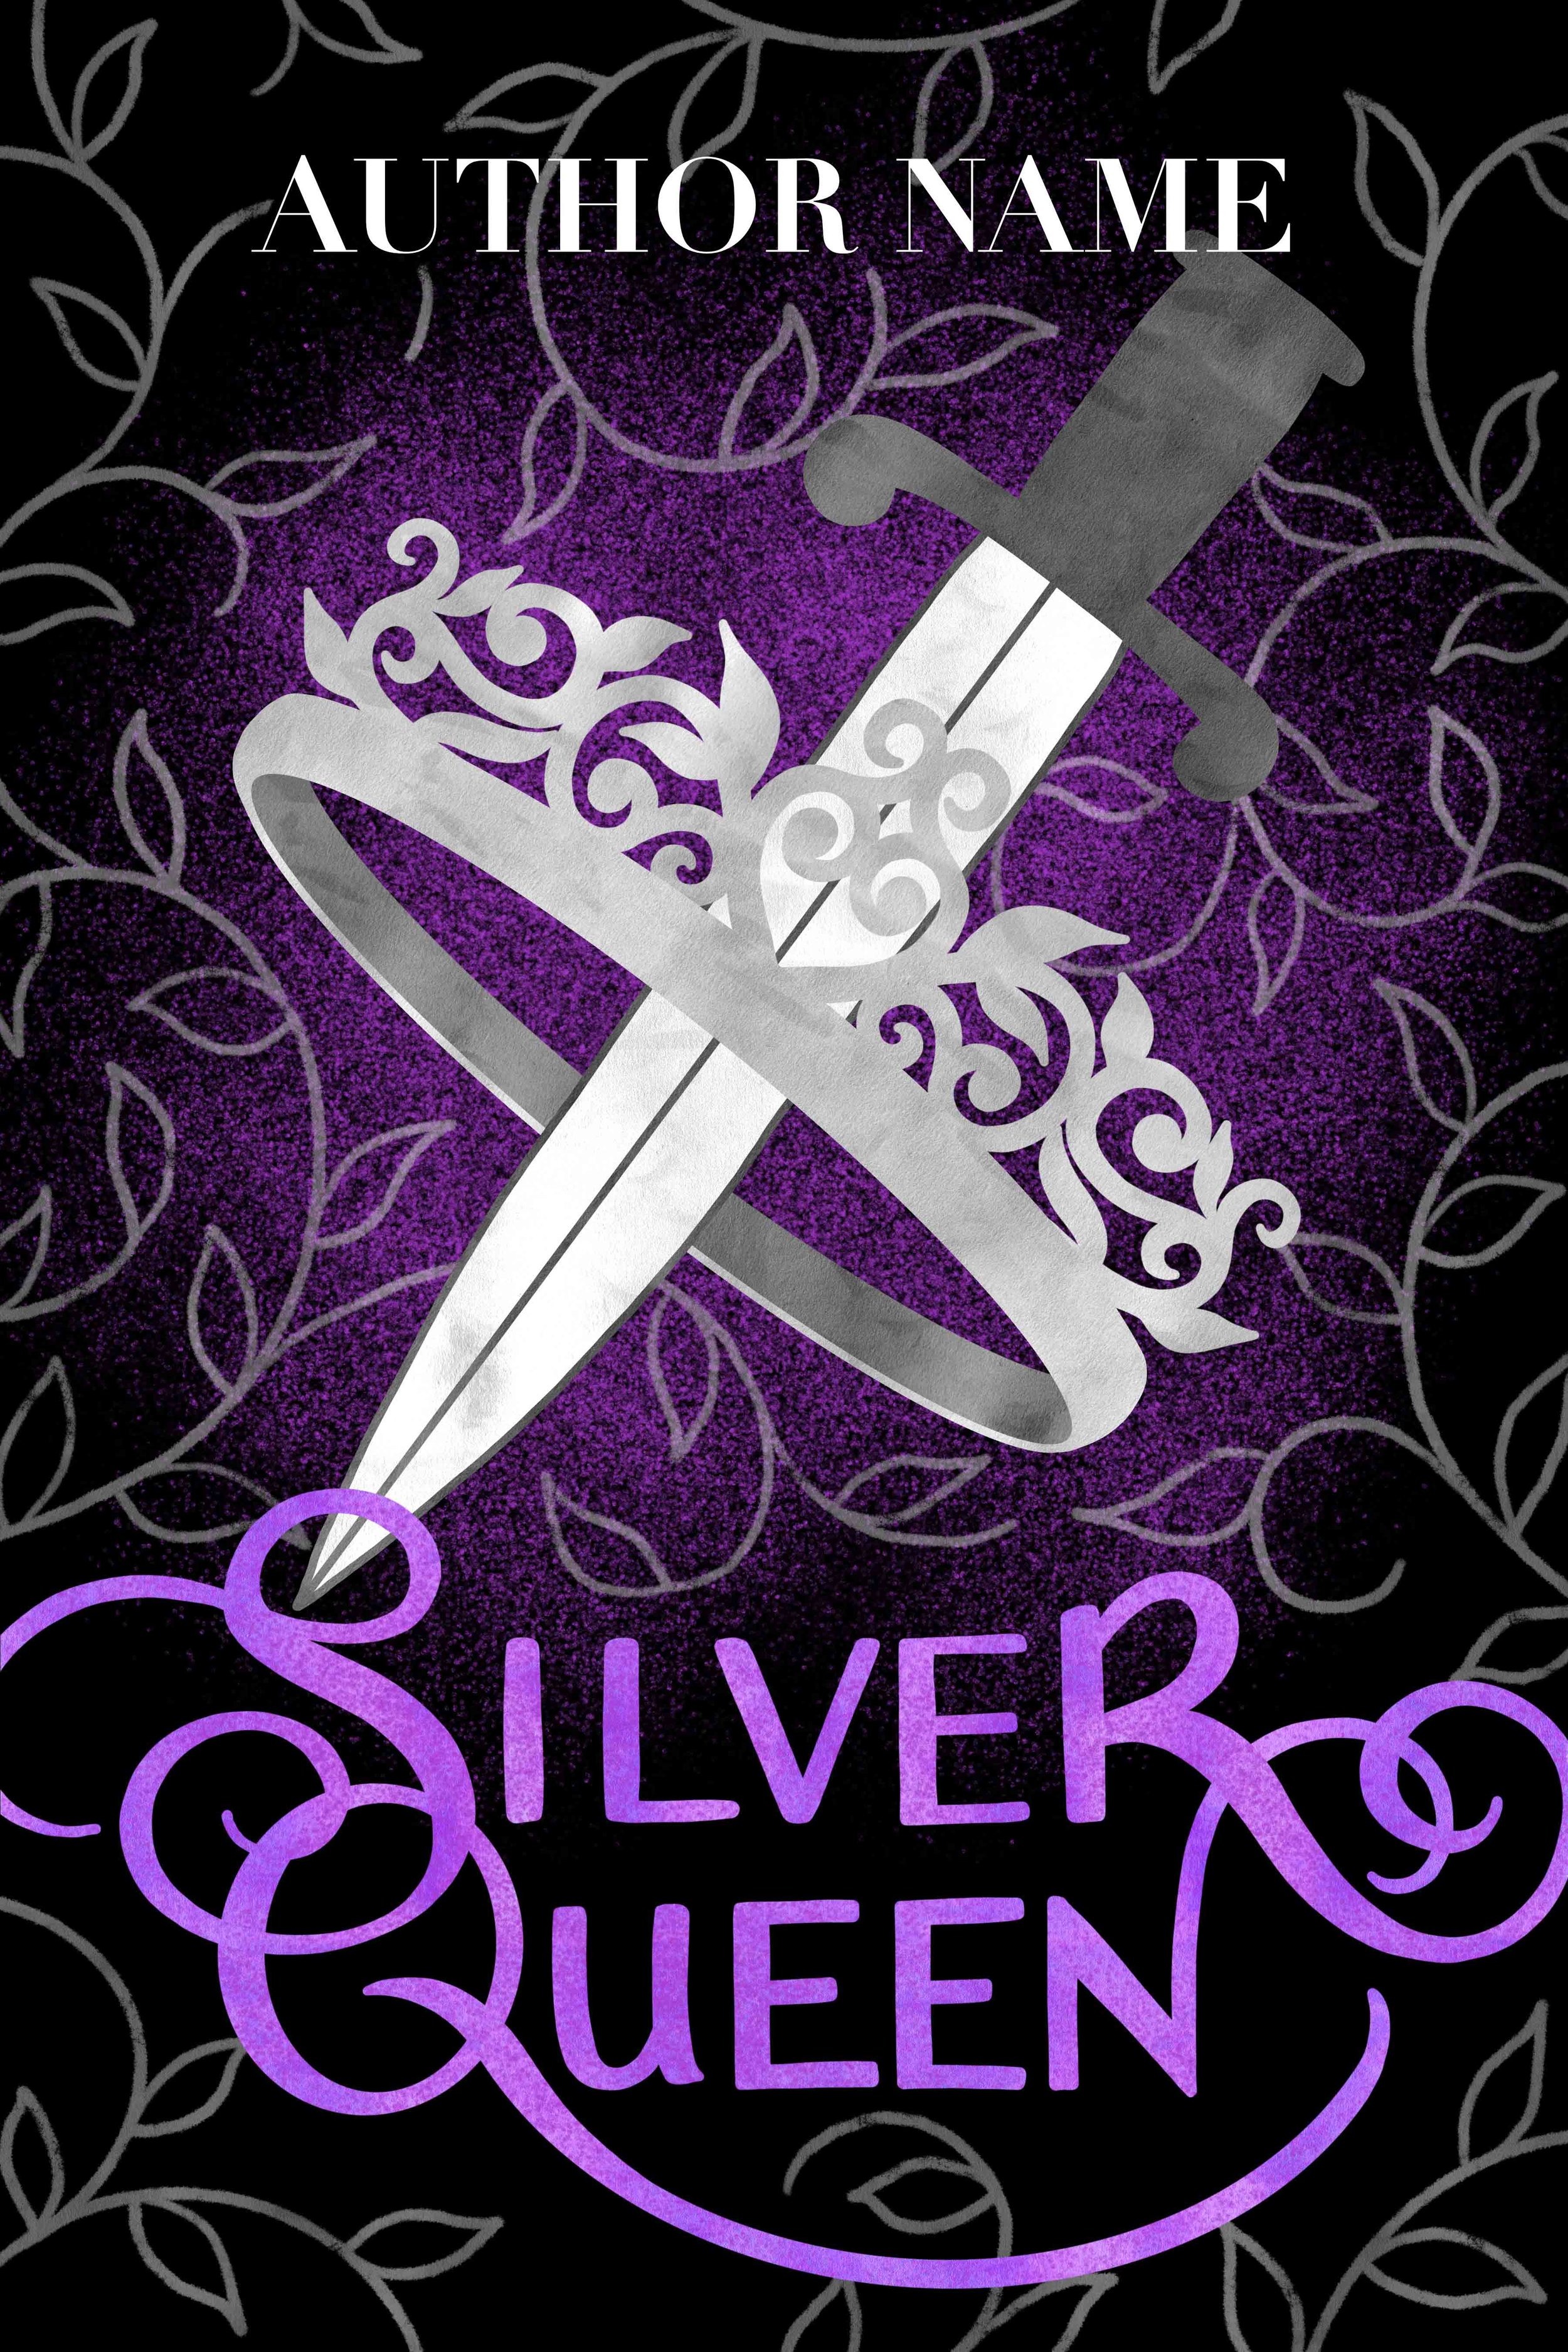 Silver_Queen pirple.jpg